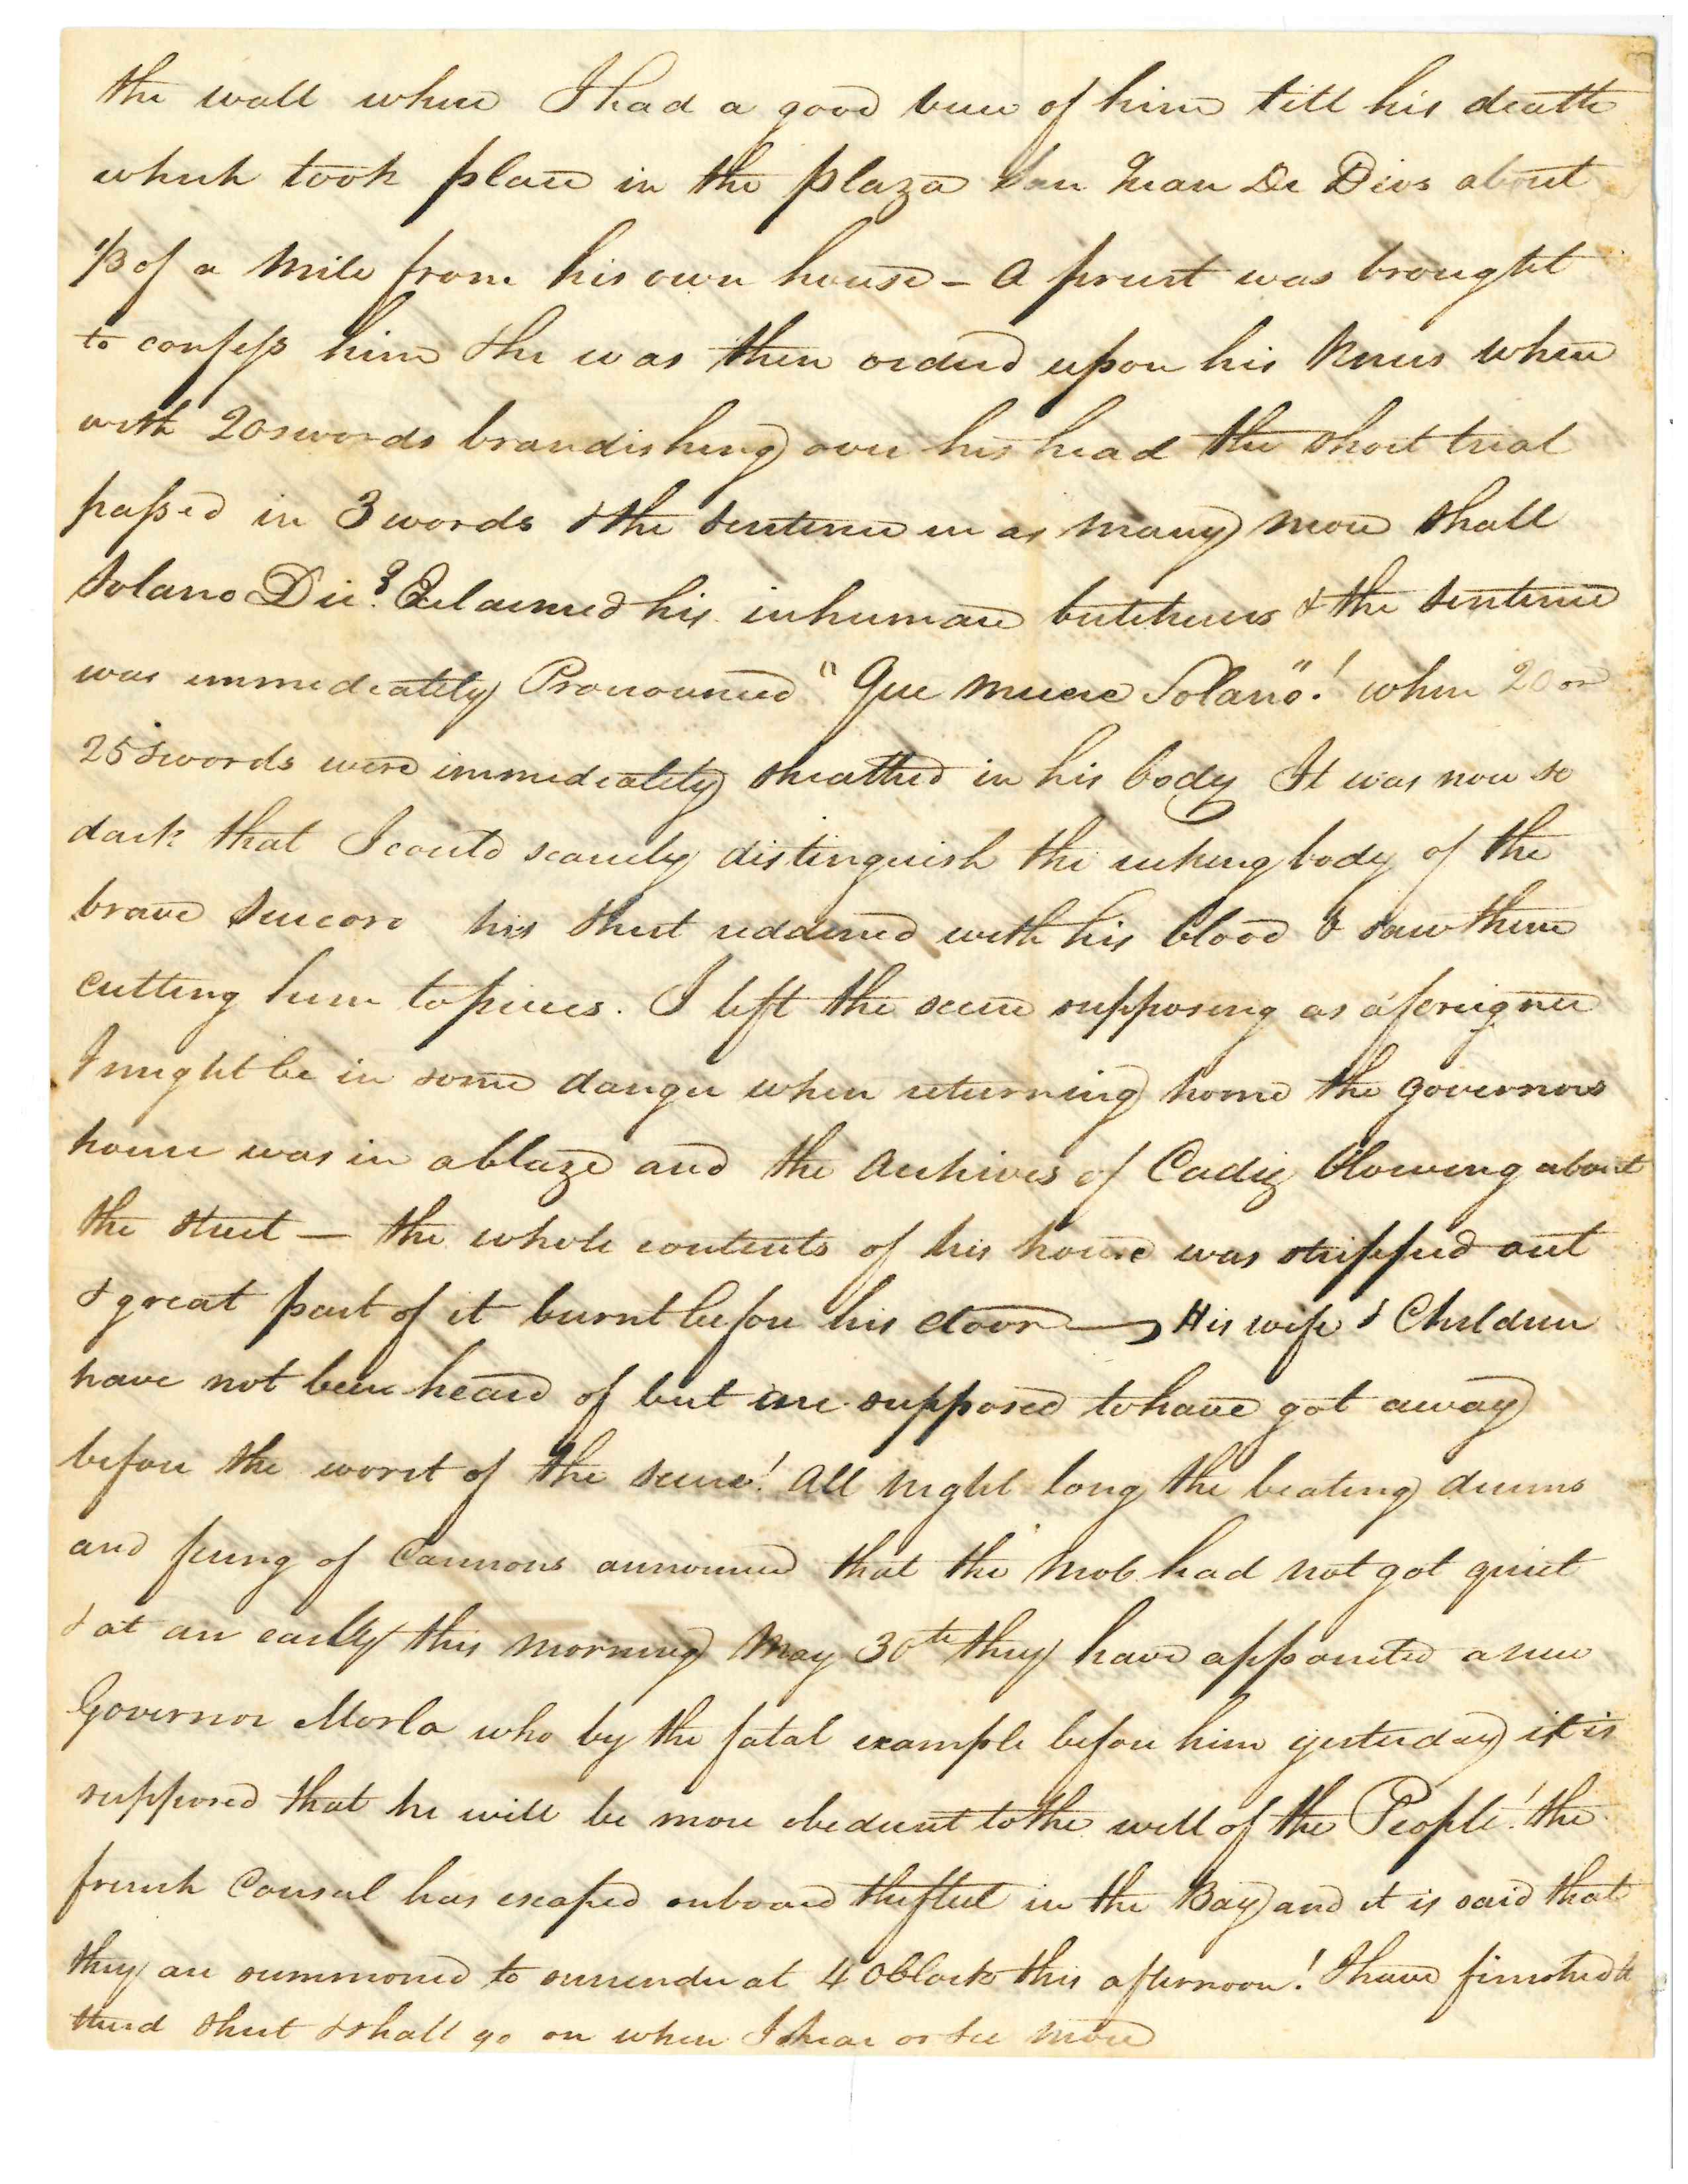 Fisher 1808 letter